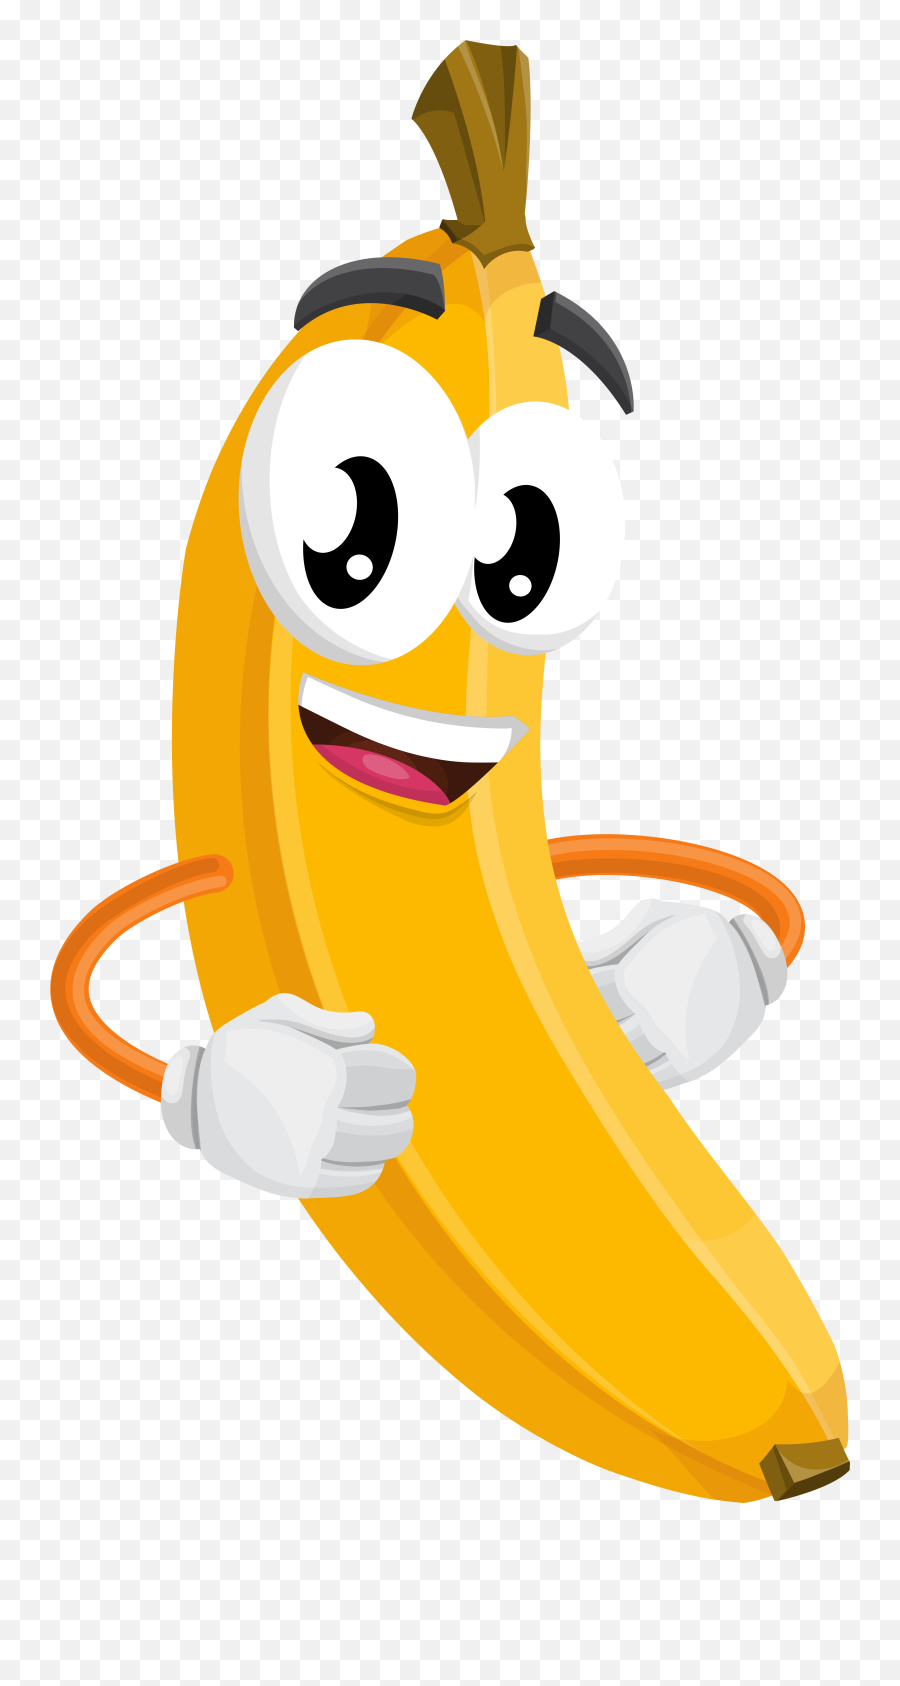 Download Cute Pixabay Bananas Nomads - Gambar Pisang Animasi Png Emoji,Hockey Playing Banana Emoticon